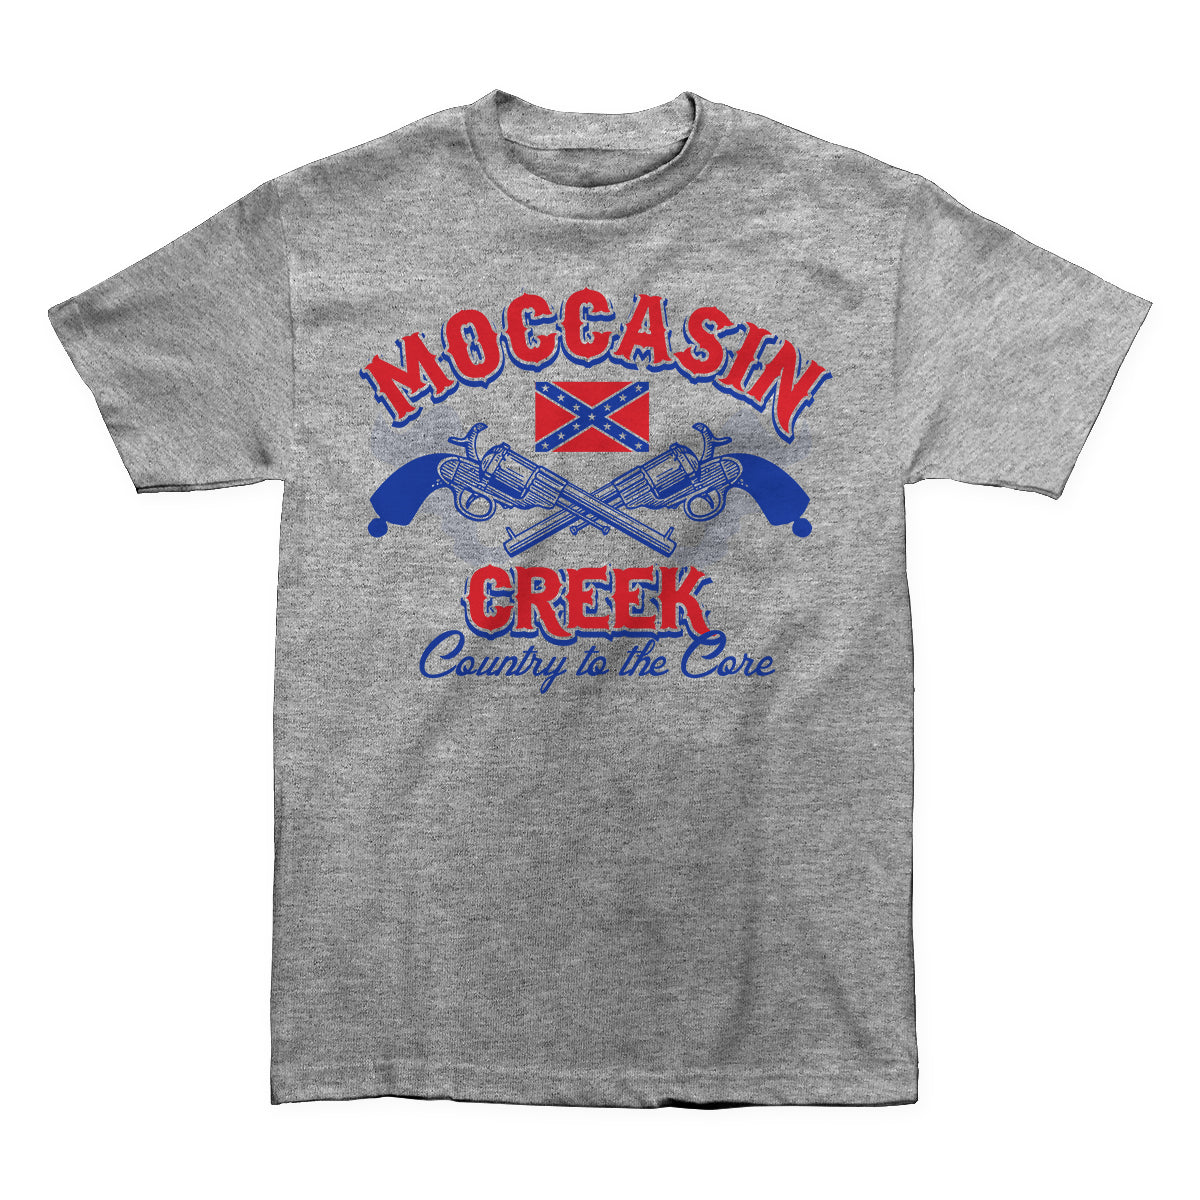 Moccasin Creek "Guns" Shirt